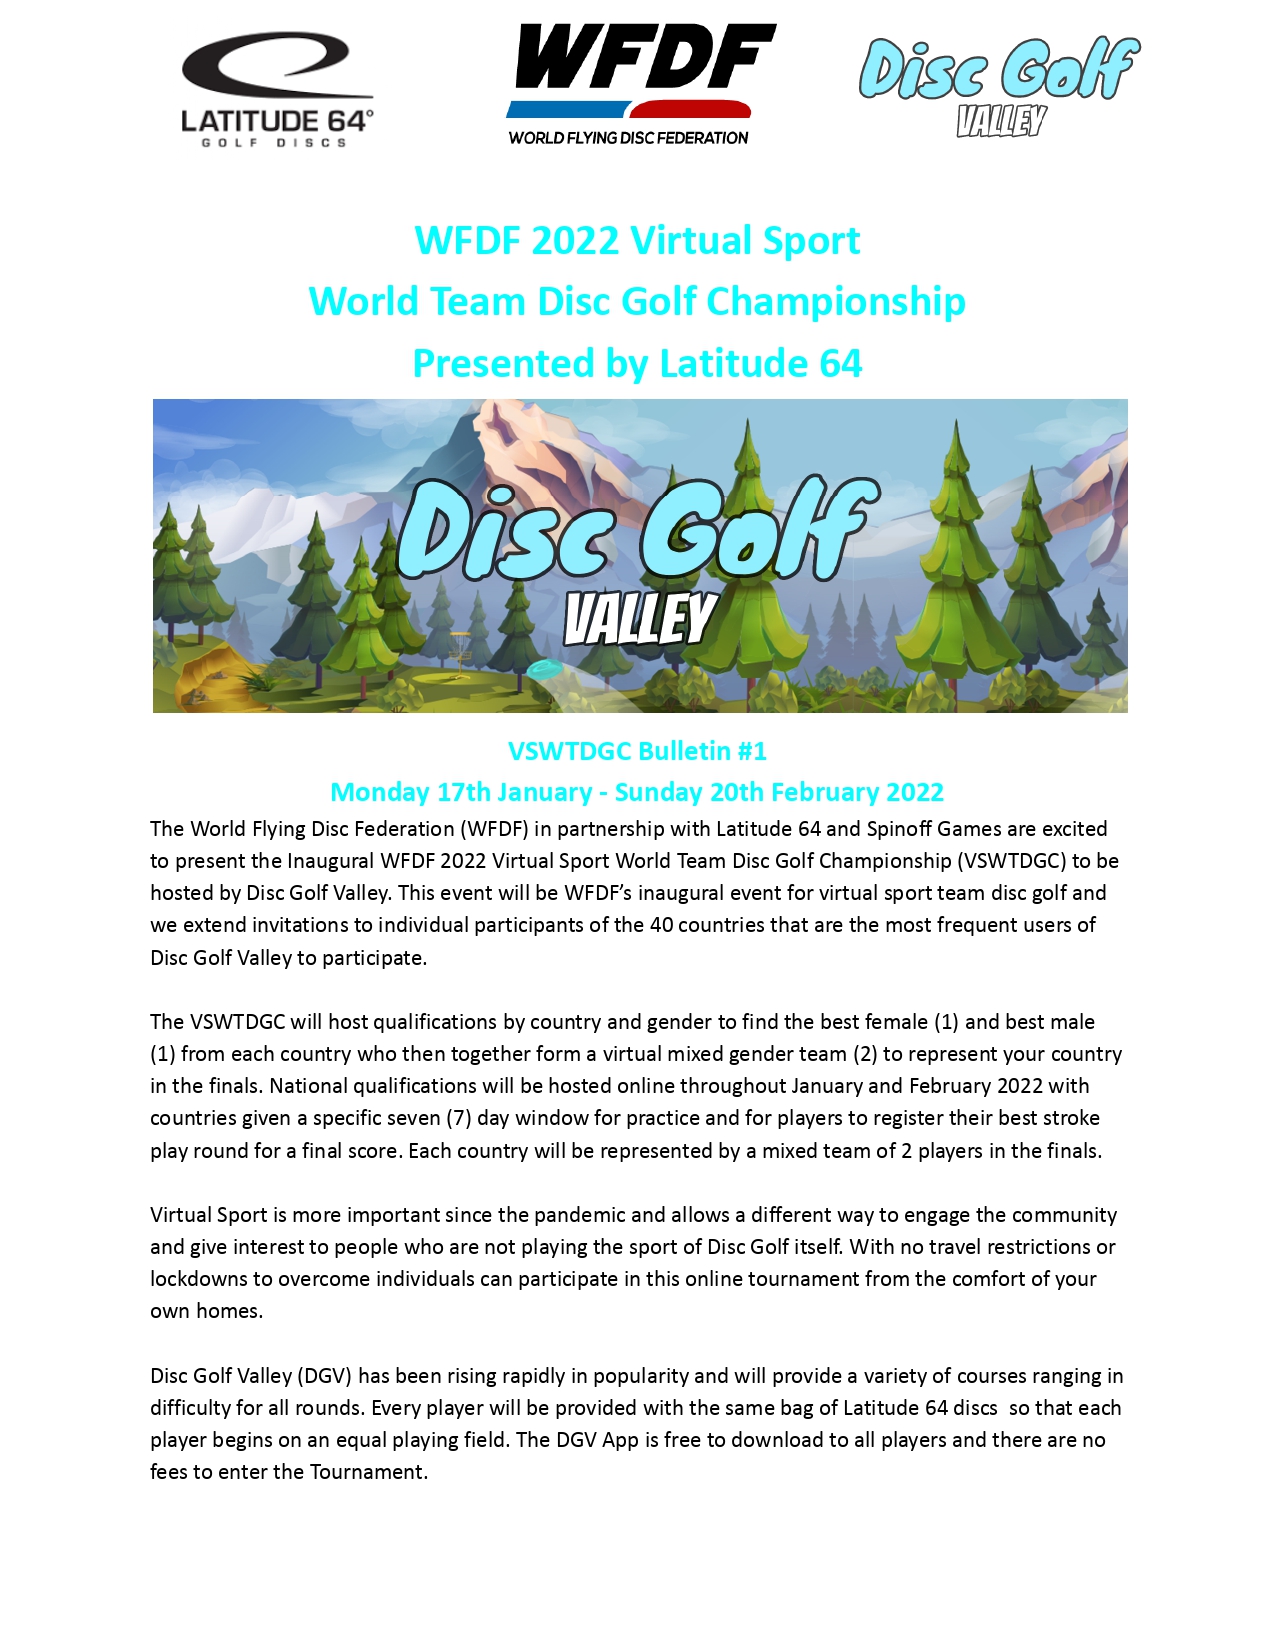 VSWTDGC2022 Bulletin 1